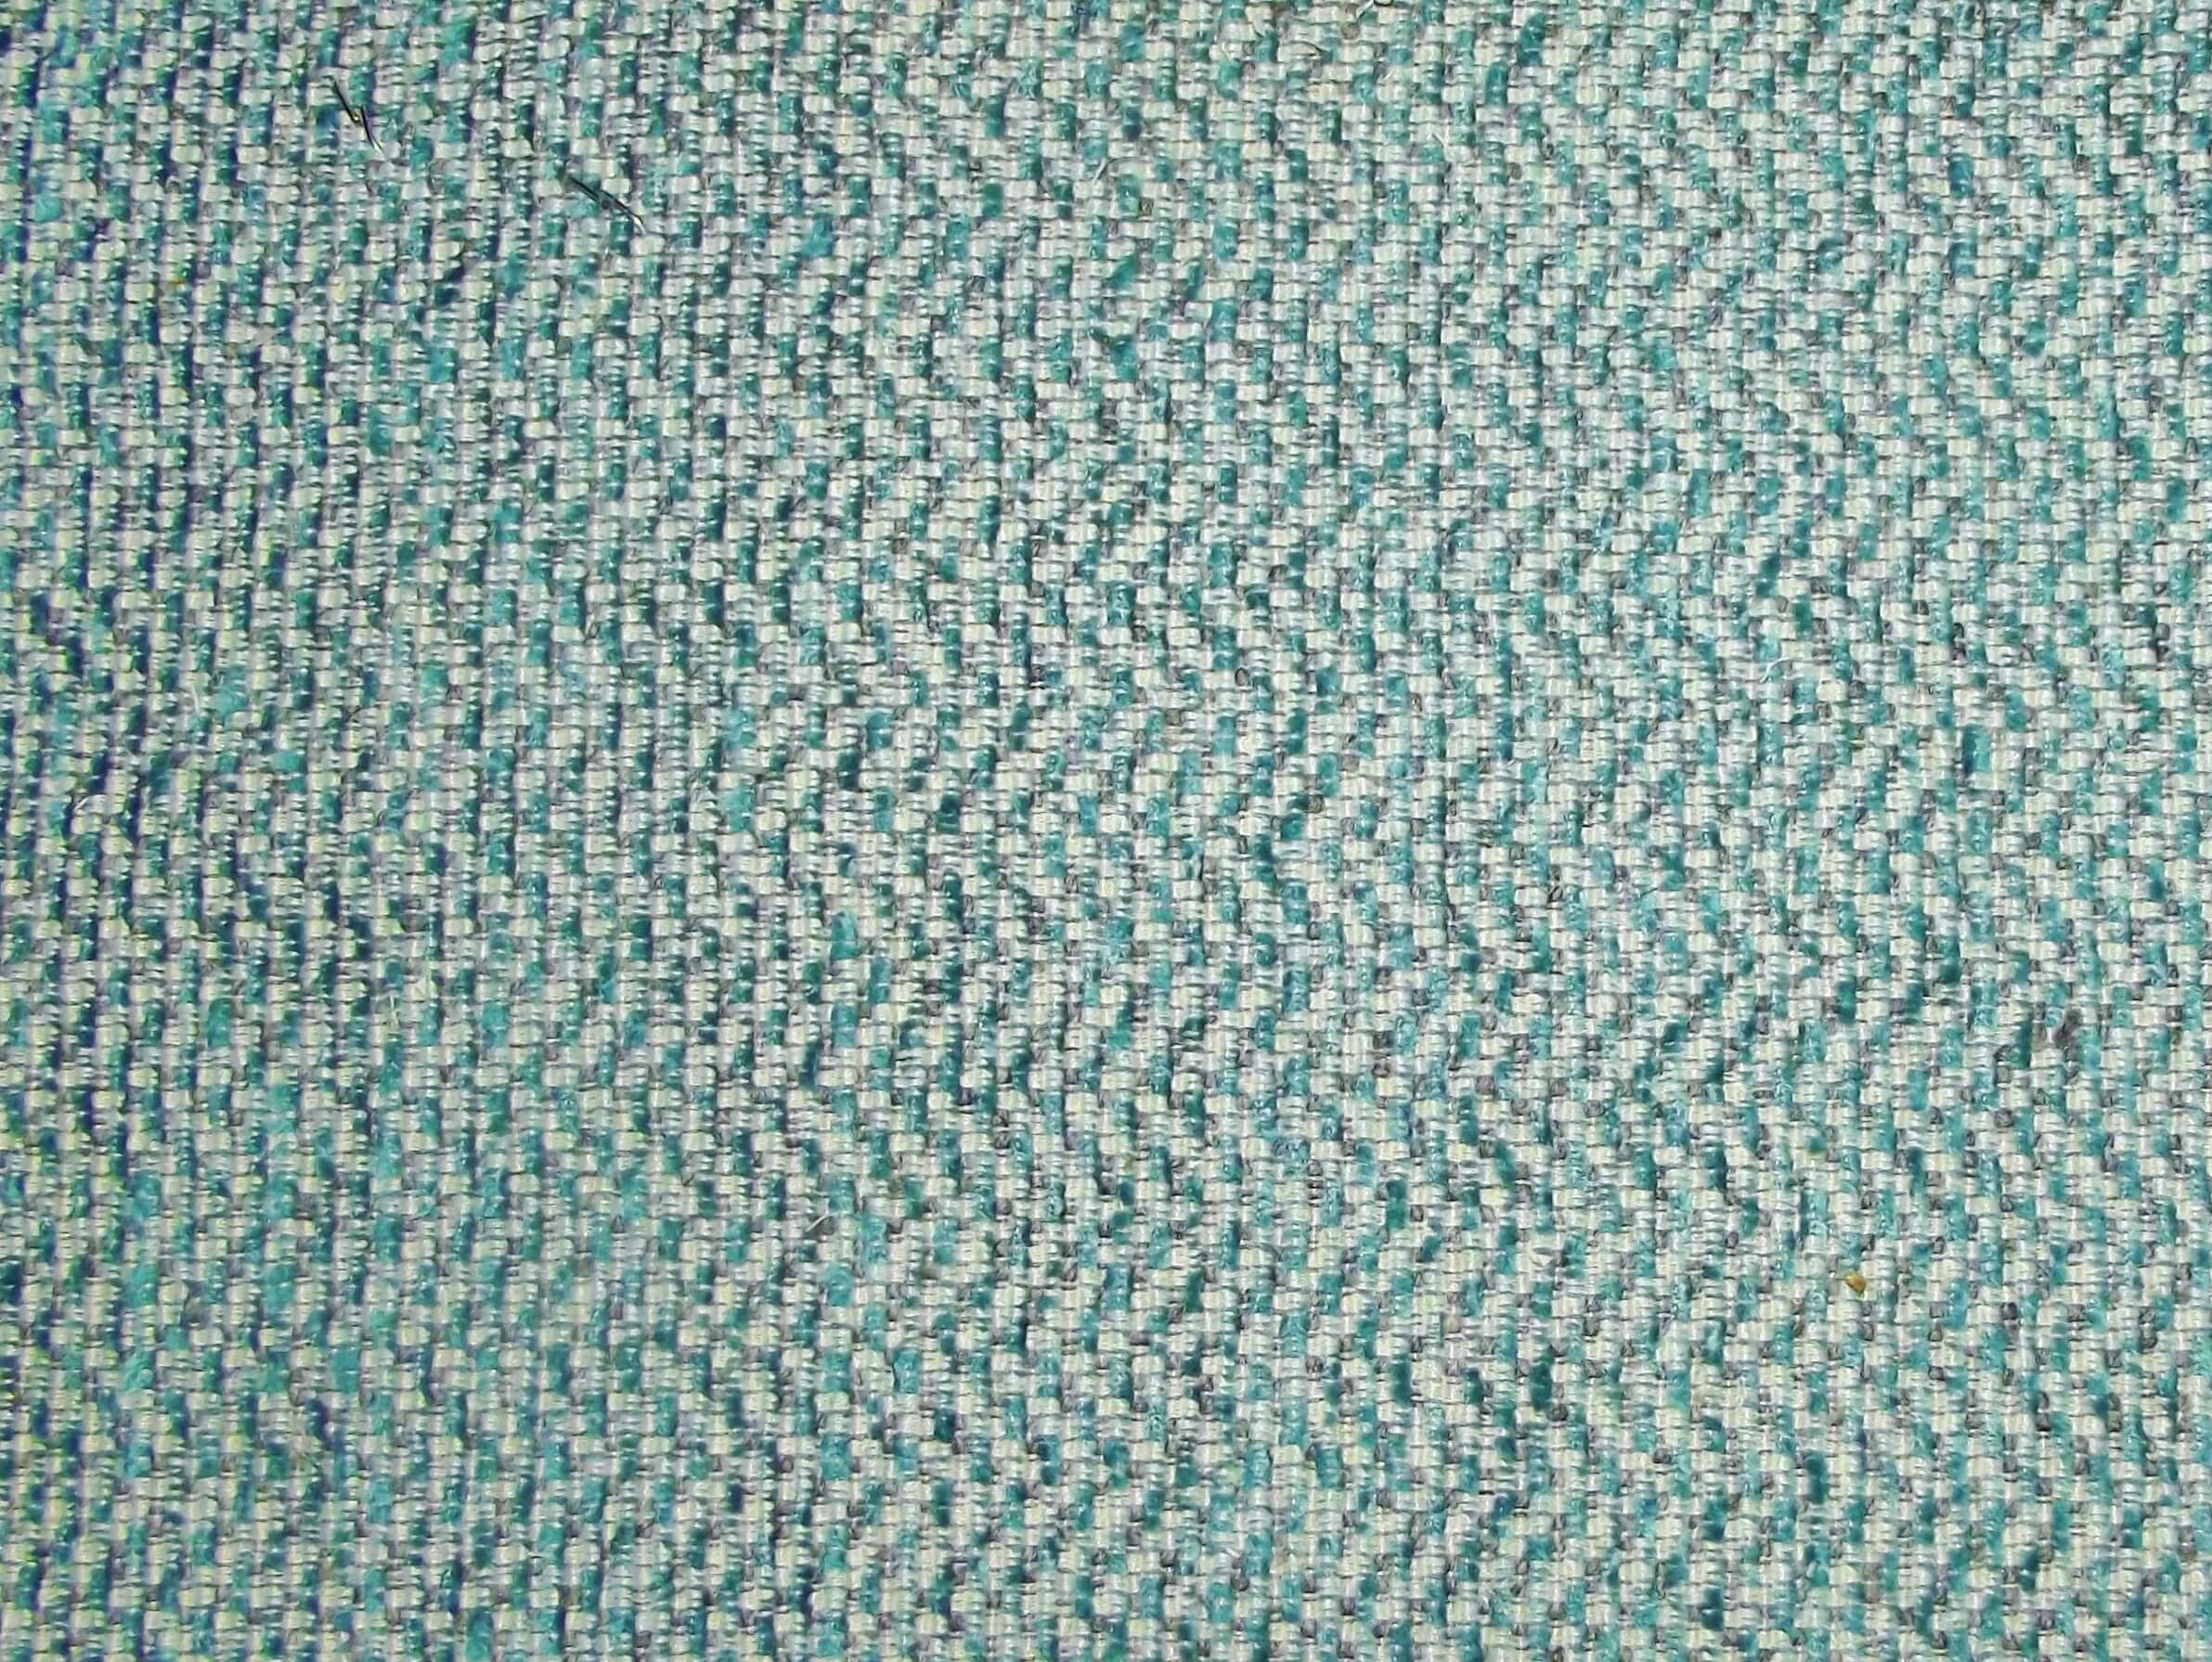 Perth Herringbone Denim Upholstery Fabric - SR13654